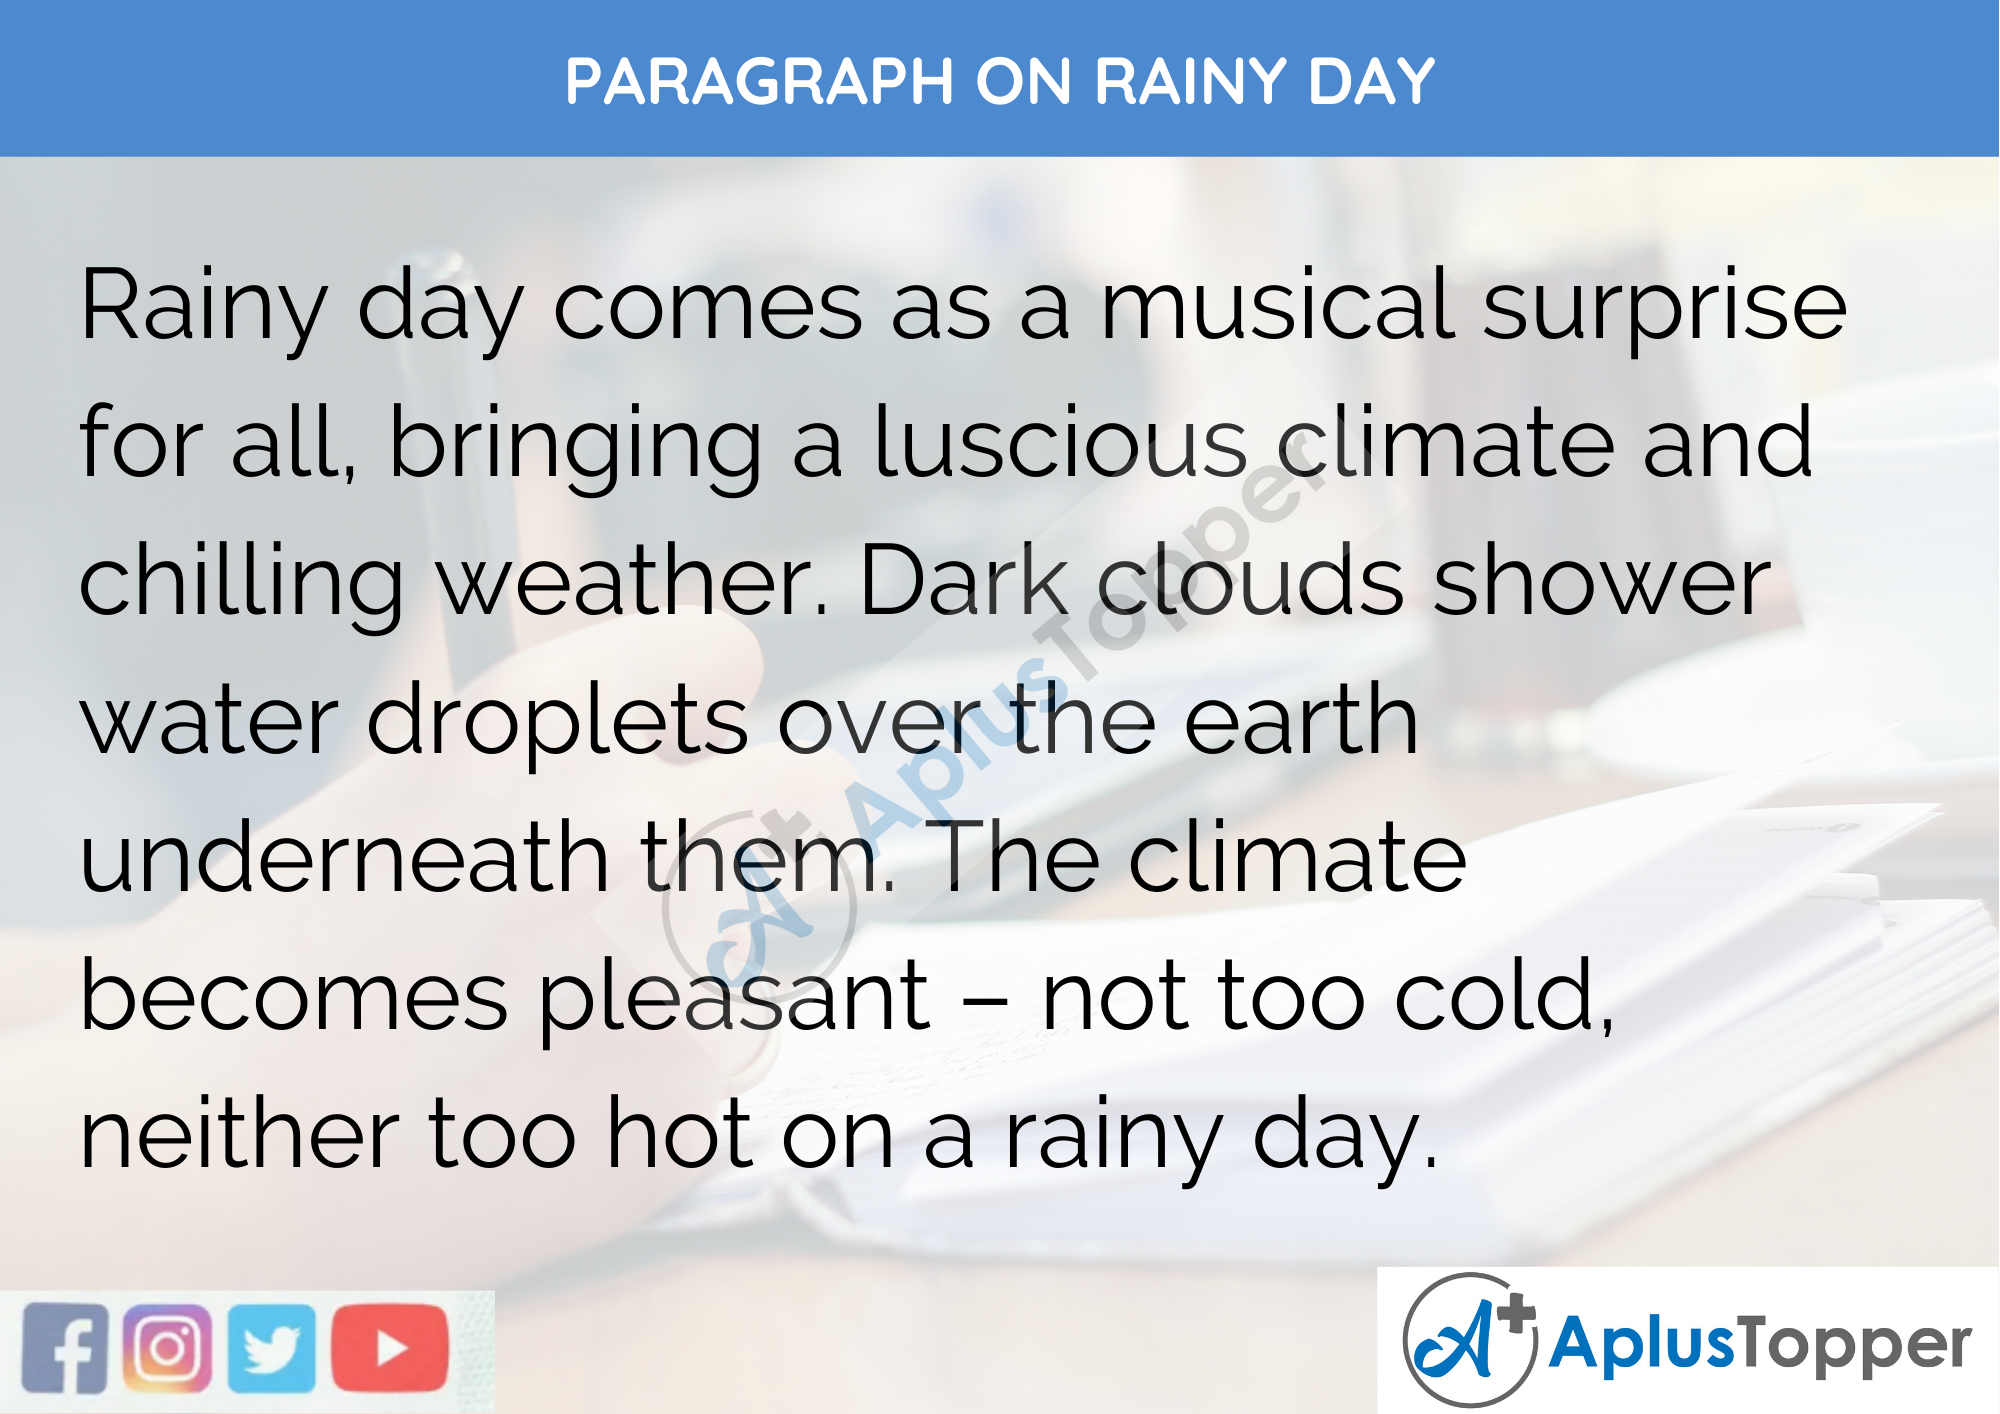 write essay on rainy day